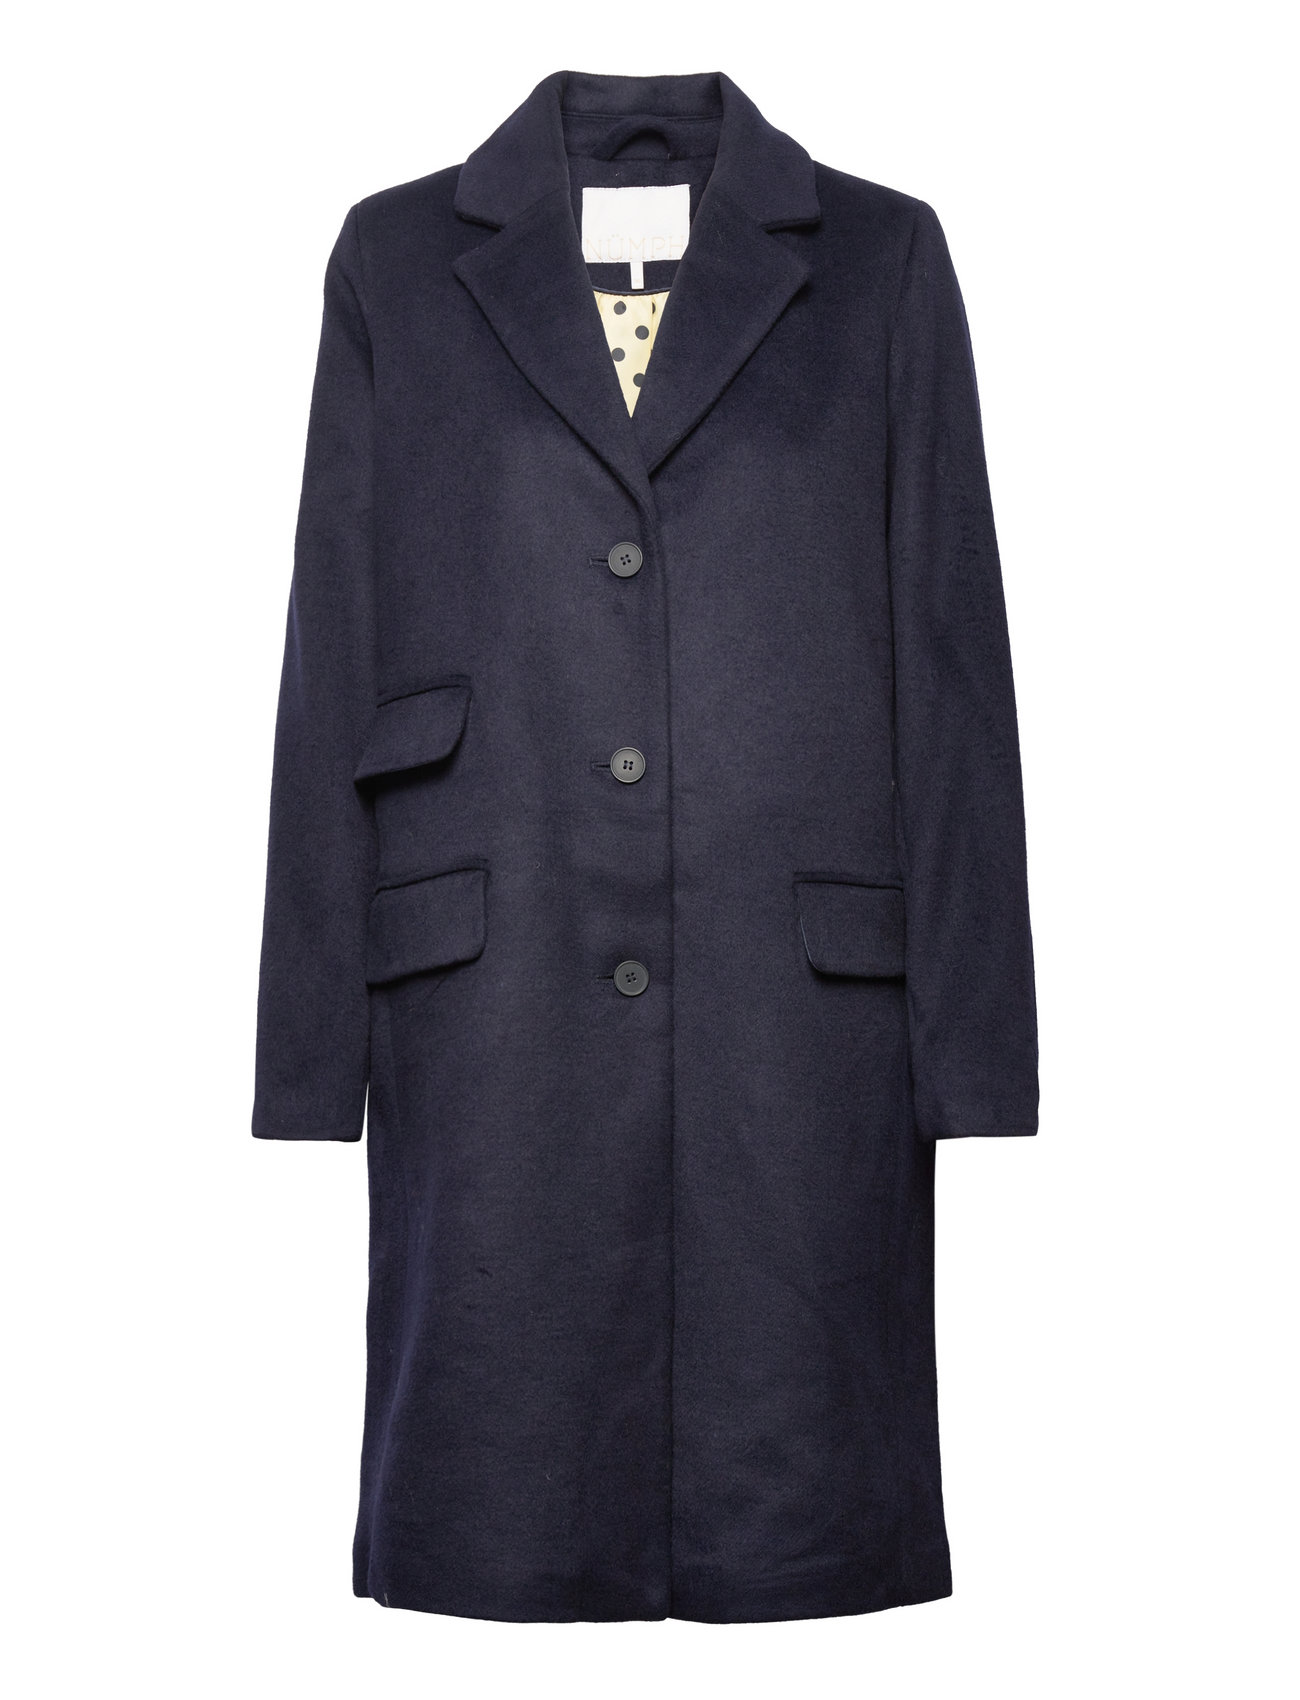 Nümph Nuchristy Jacket - 189.99 €. Buy Winter Coats from Nümph online ...